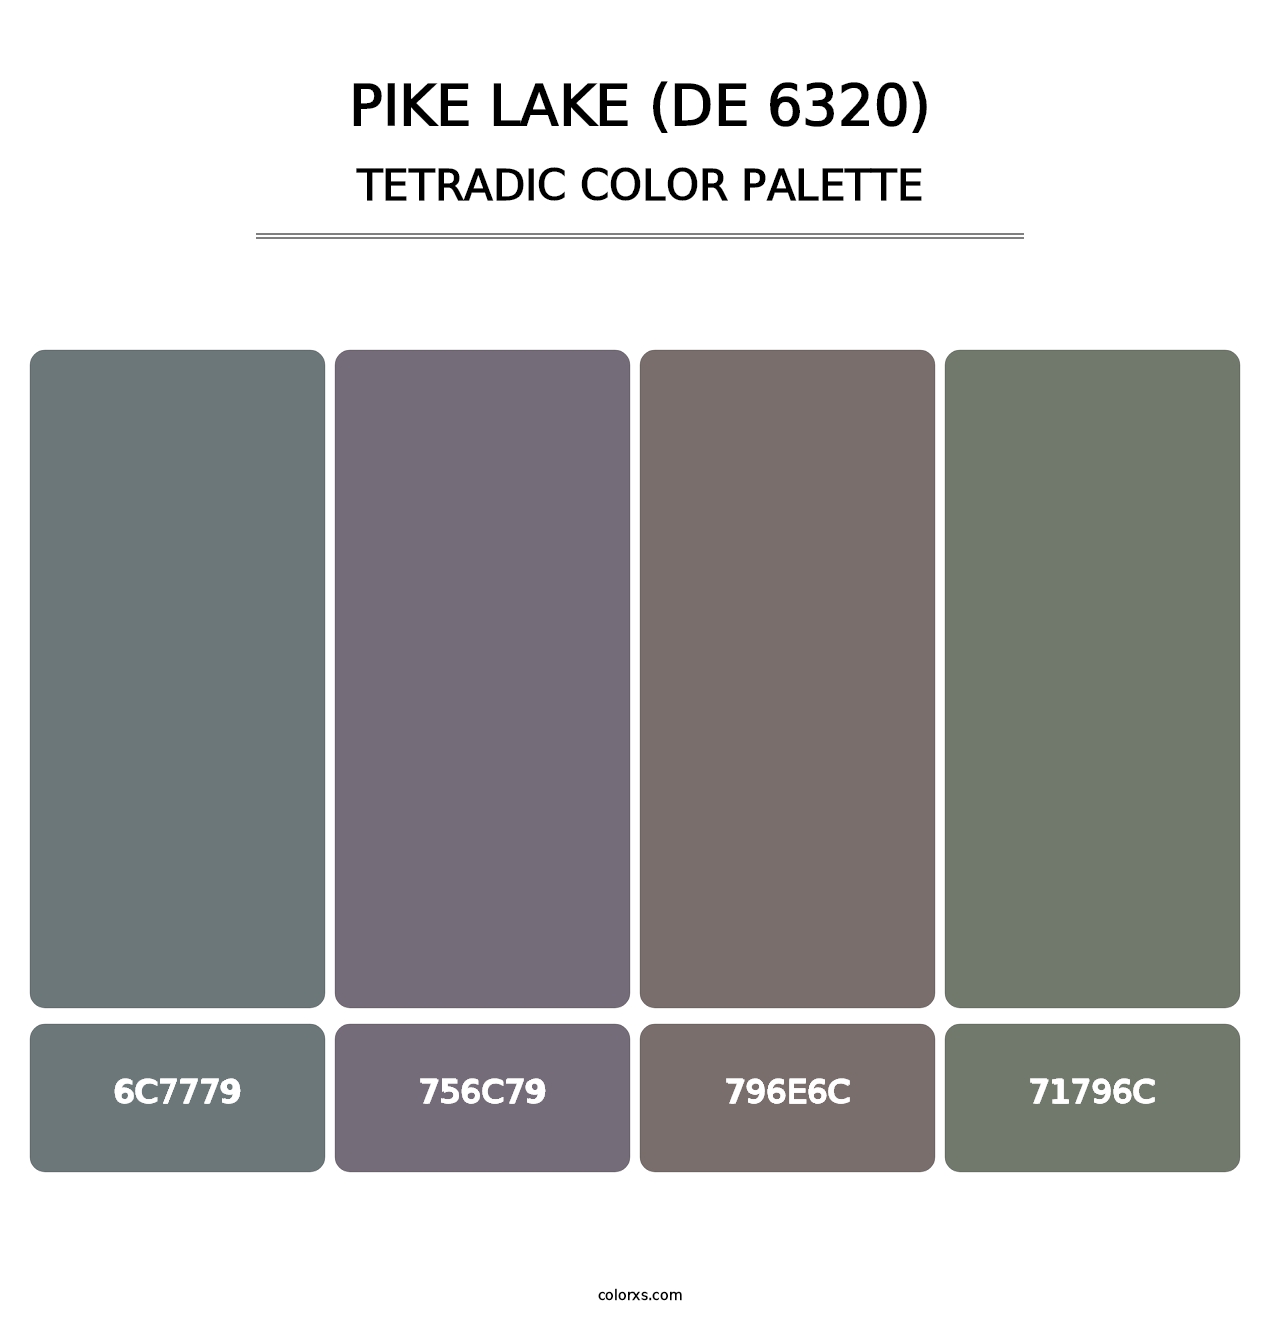 Pike Lake (DE 6320) - Tetradic Color Palette